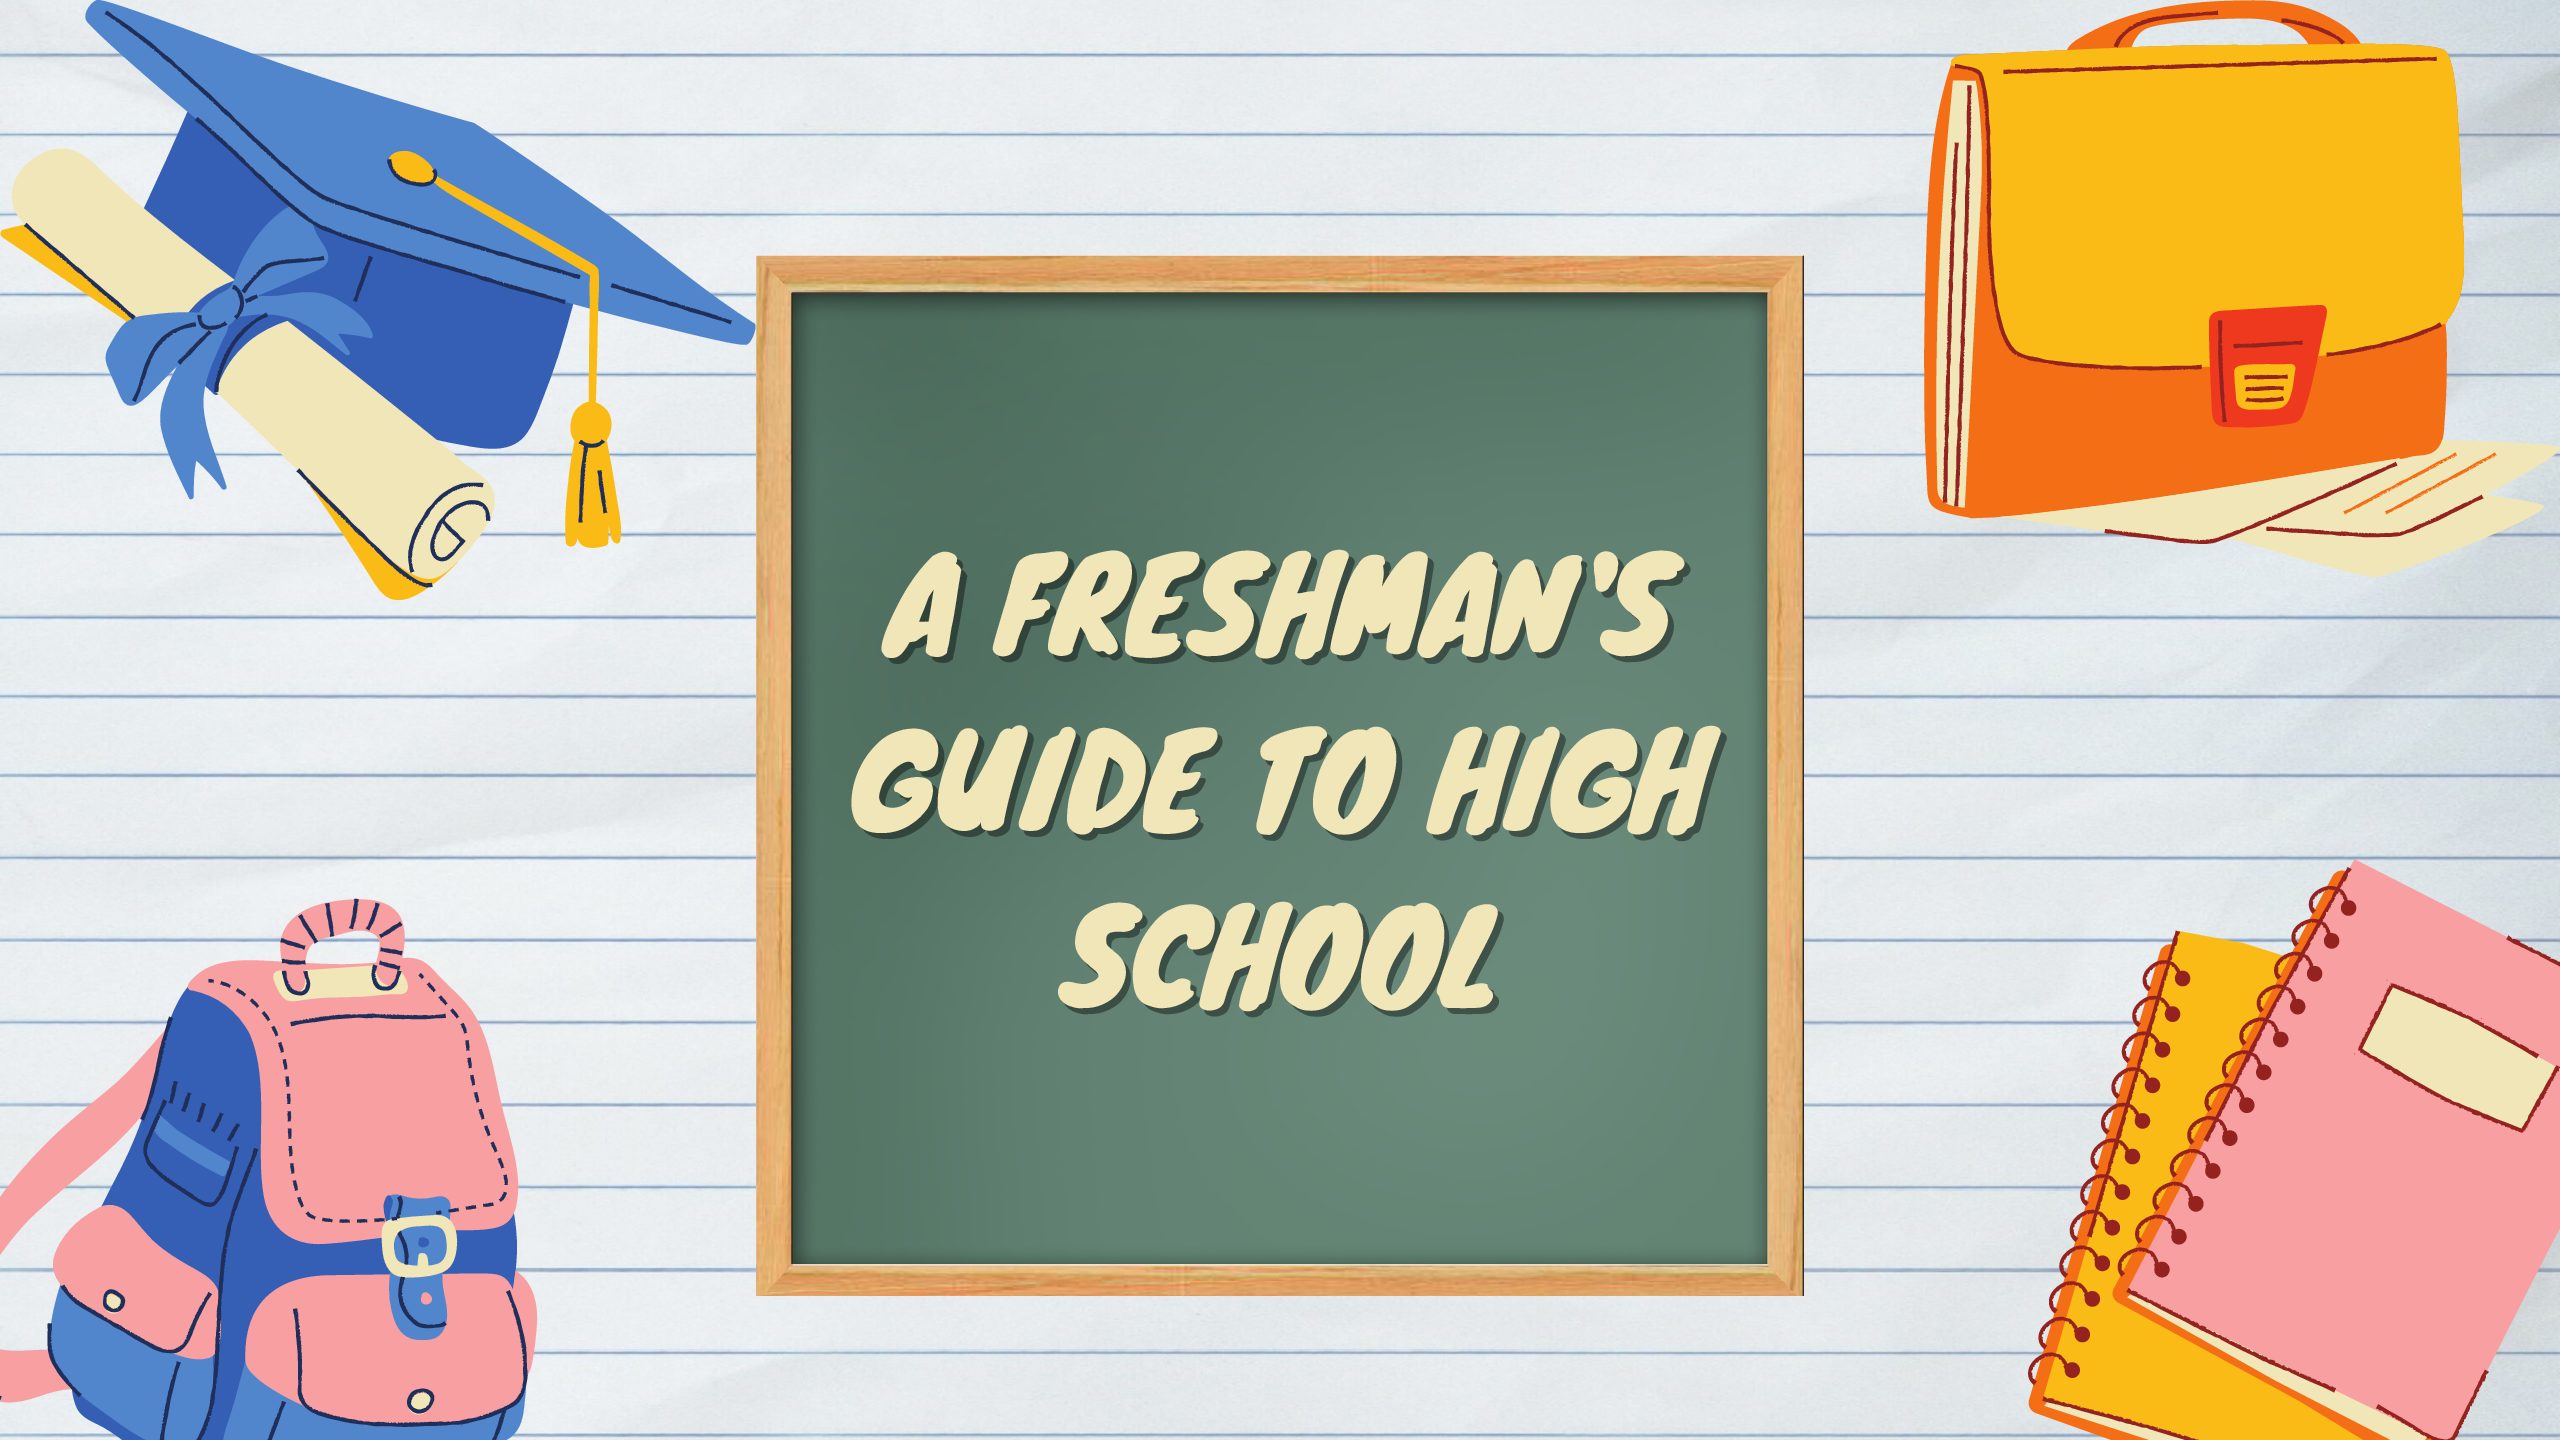 A freshman’s guide to high school